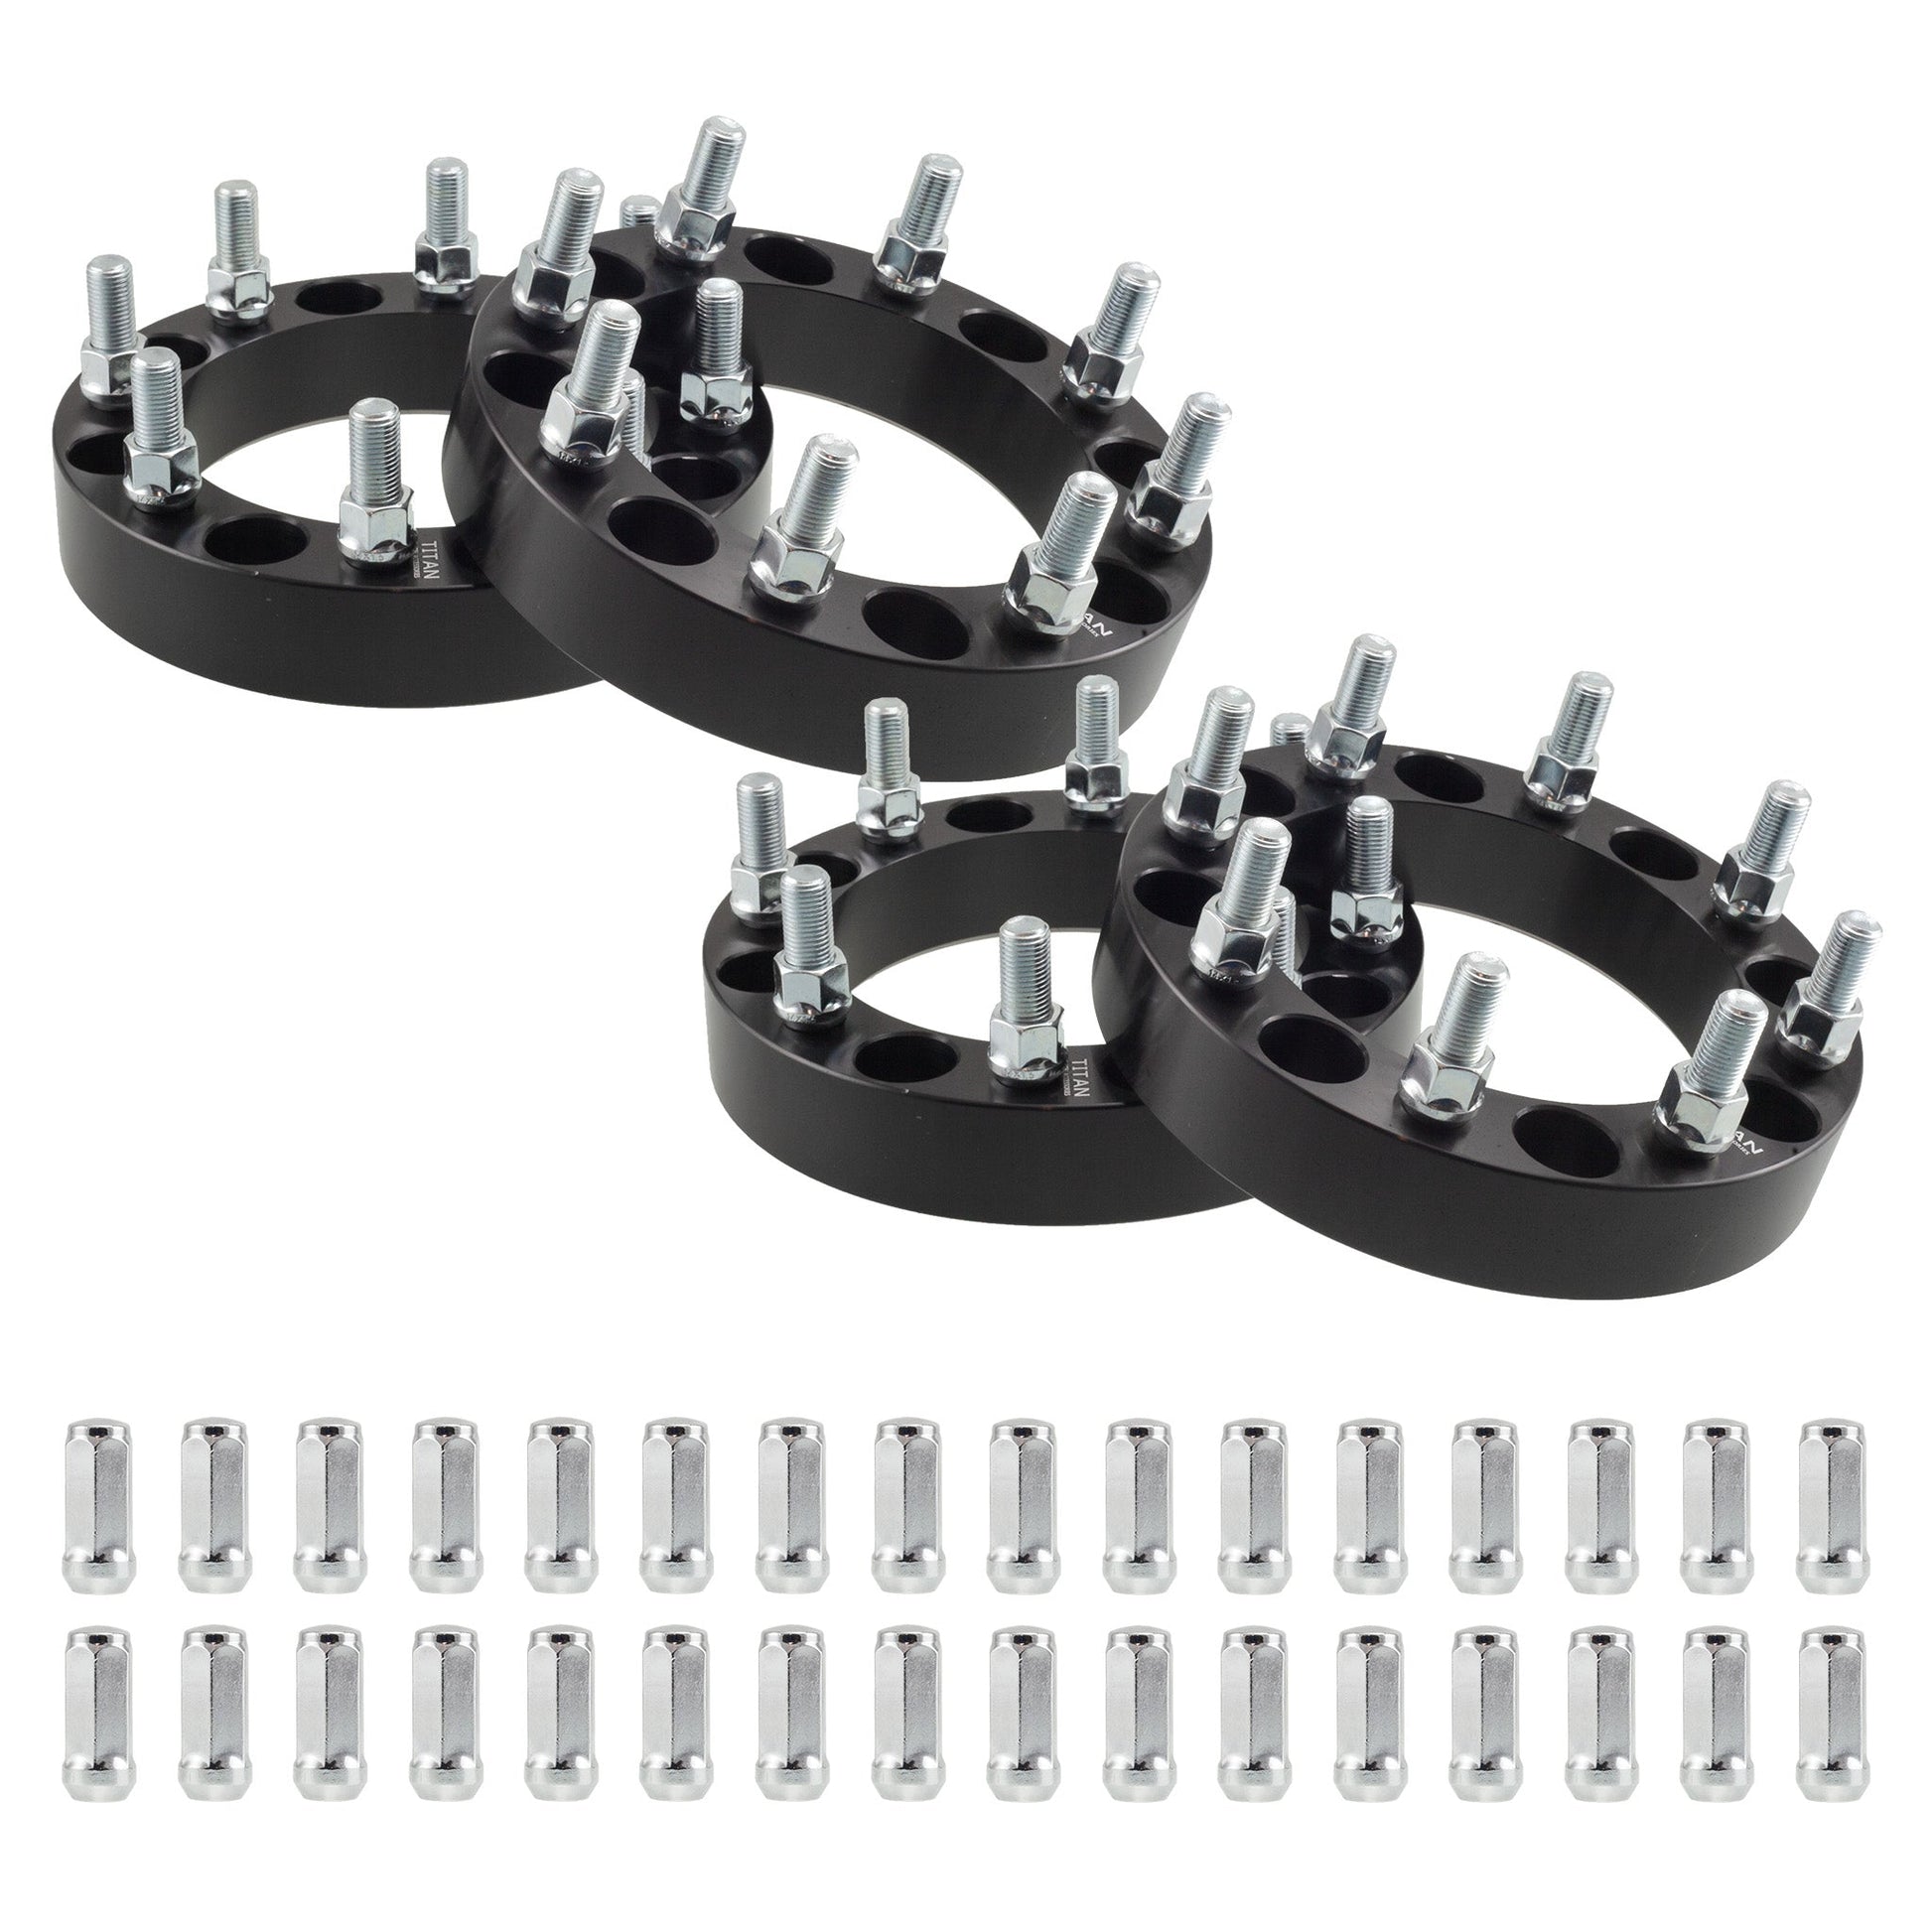 2" (50mm) Titan Wheel Spacers for GMC Sierra Savana 2500 3500 | 8x6.5 | 116.7 Hubcentric |14x1.5 Studs | Titan Wheel Accessories